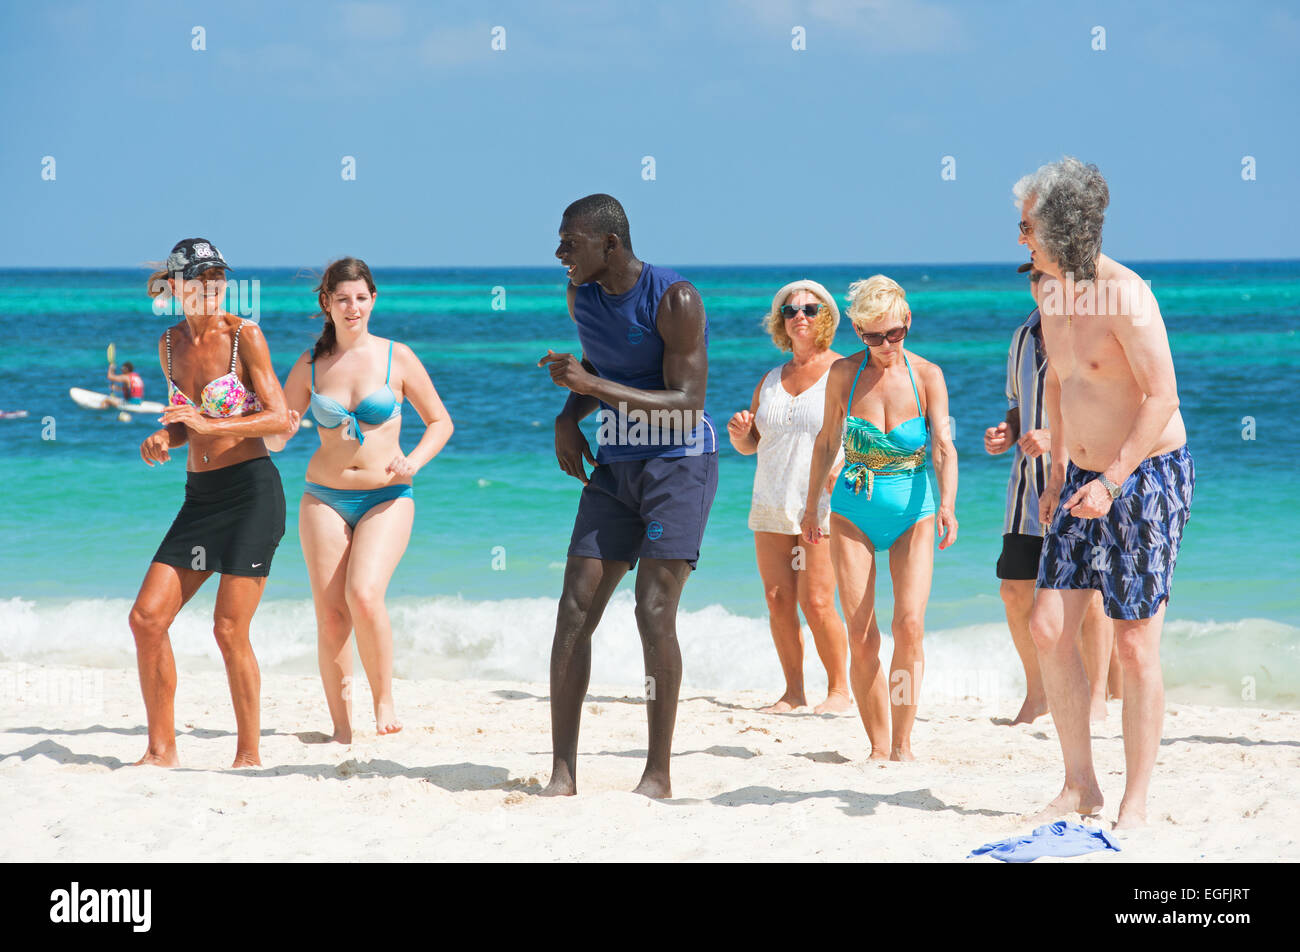 DOMINICAN REPUBLIC. Caribbean dancing and zumba on Punta Cana beach. 2015. Stock Photo